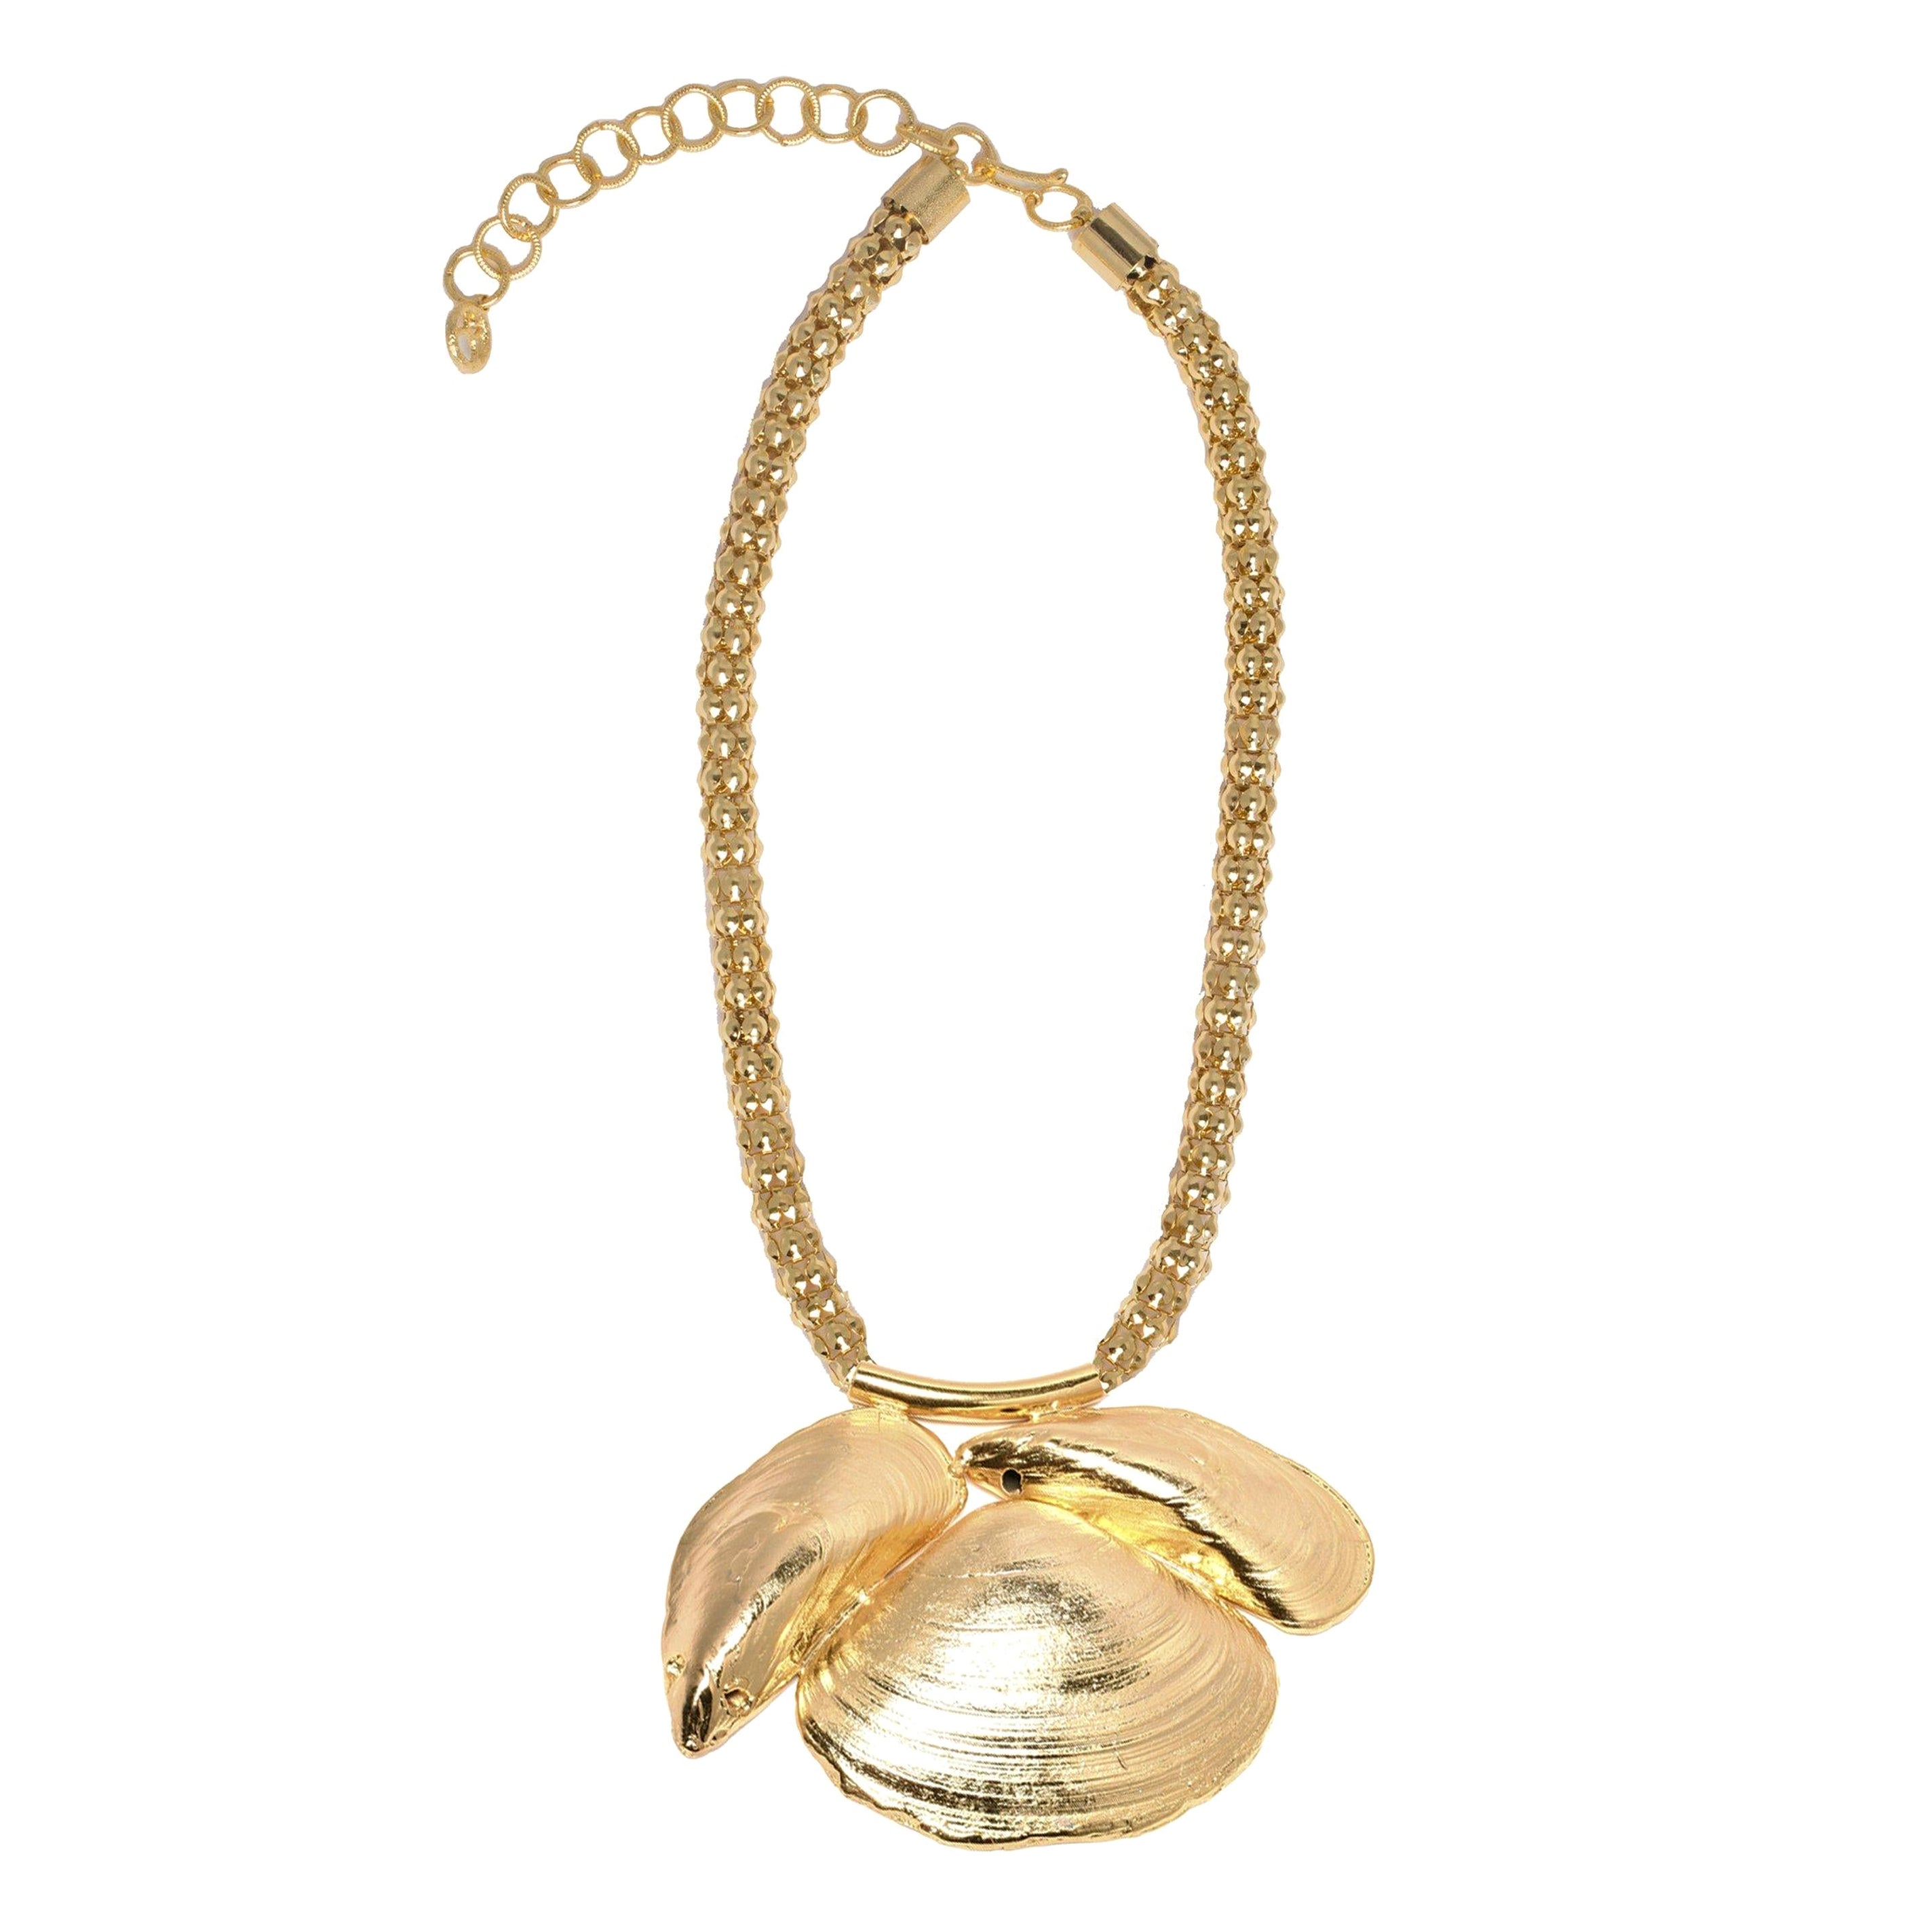 Antique Bronze Vintage Style Marine Charm Pendant & Chain Clam Shell Necklace 